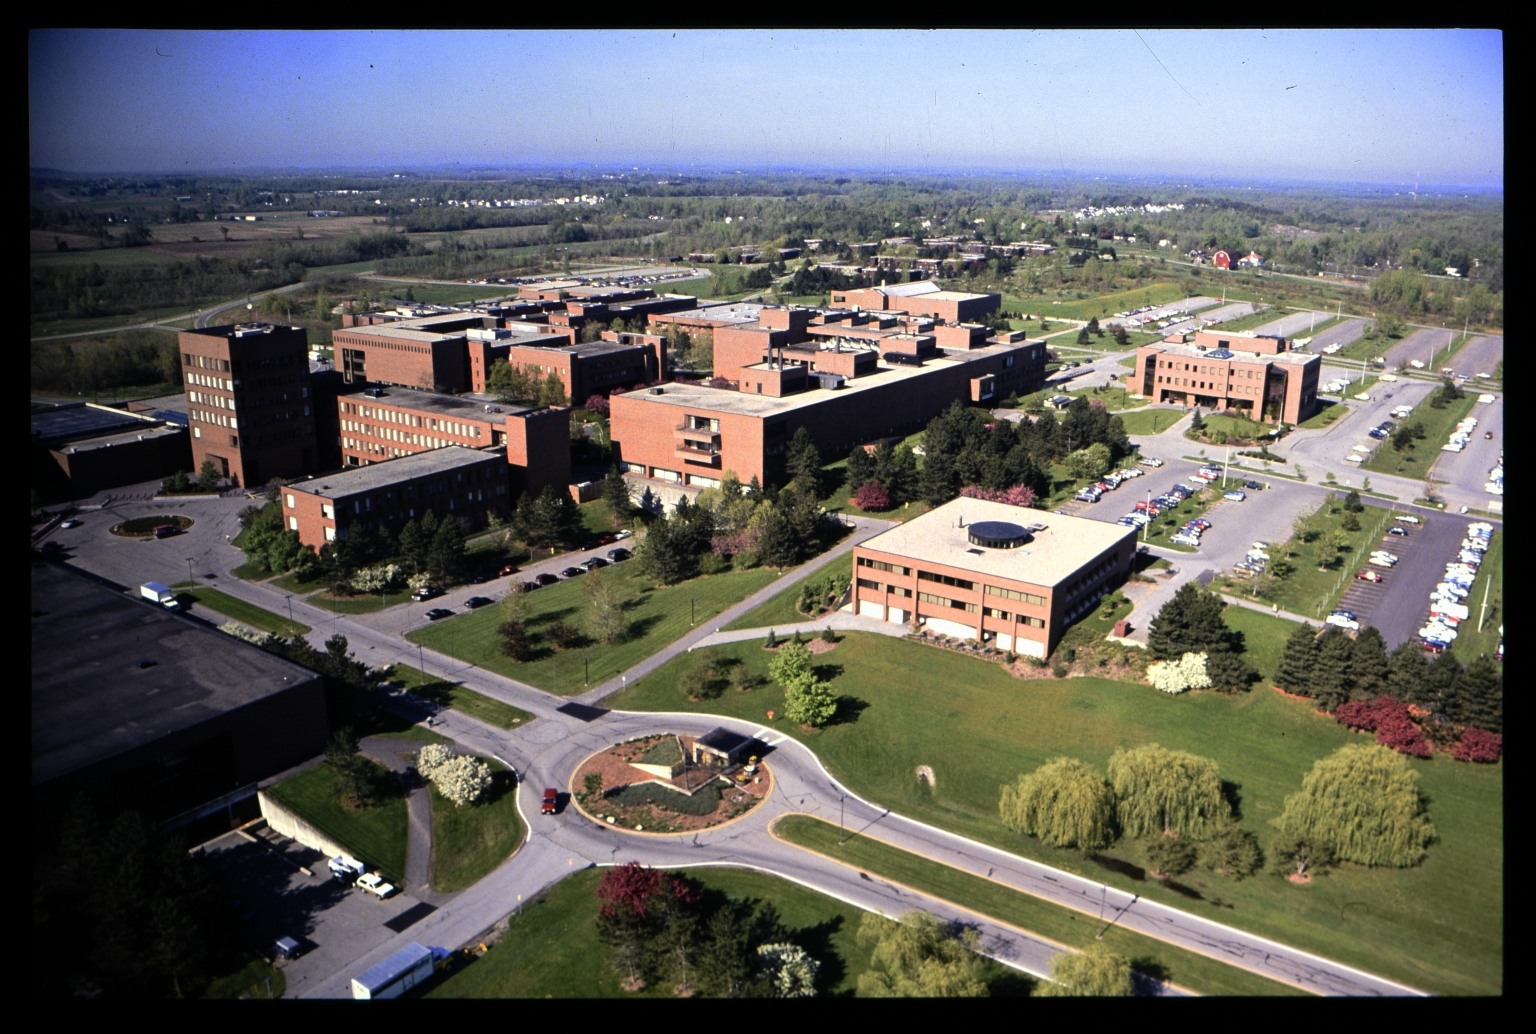 Aerial view of the Henrietta campus